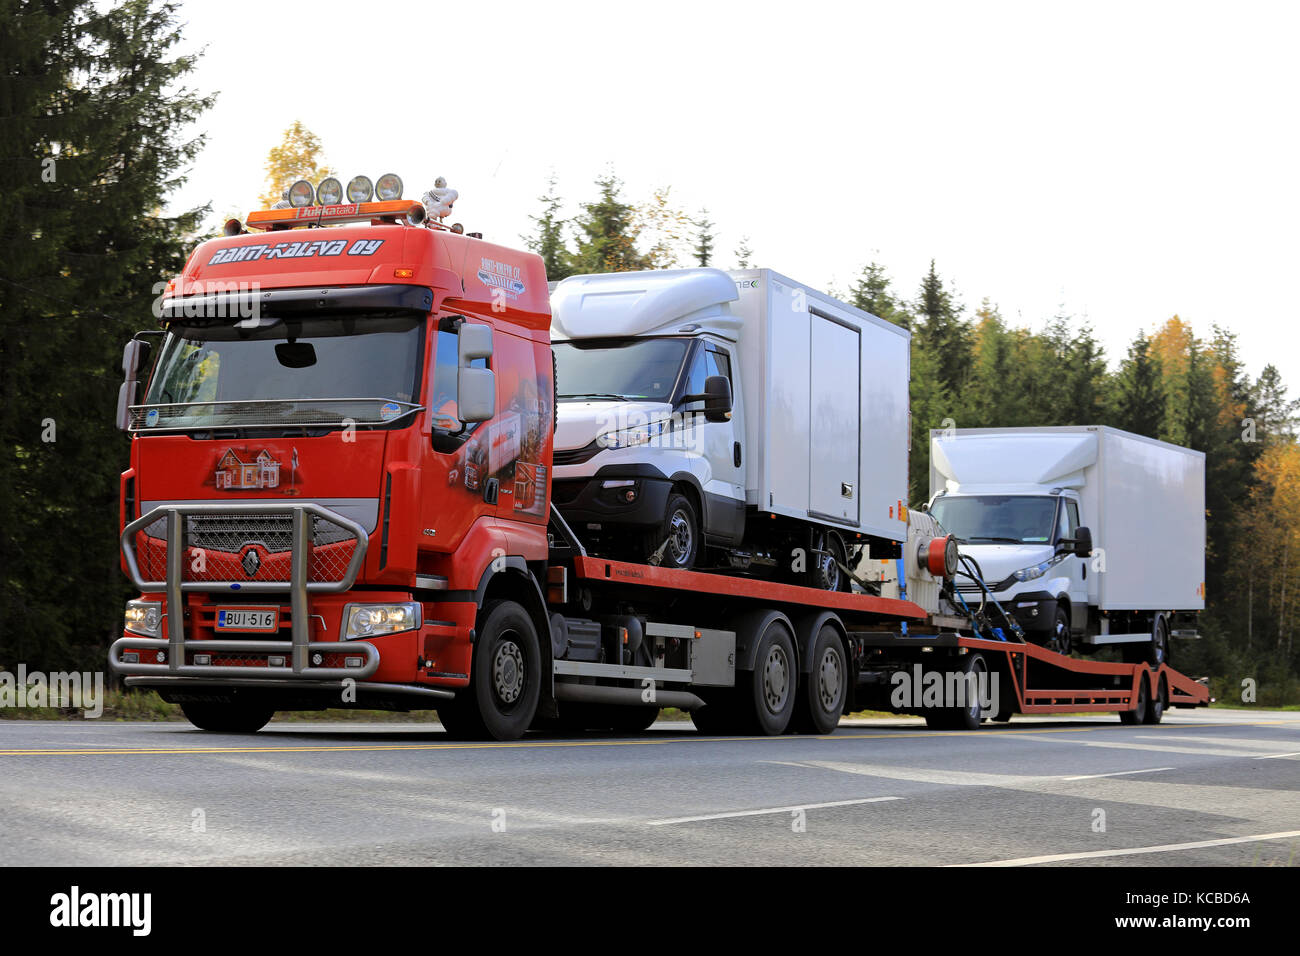 Tammela, Finnland - 29. September 2017: rote Renault Premium 450 Lkw von rahti - kaleva Oy Transporte zwei Iveco Daily Transporter entlang der Autobahn. Stockfoto